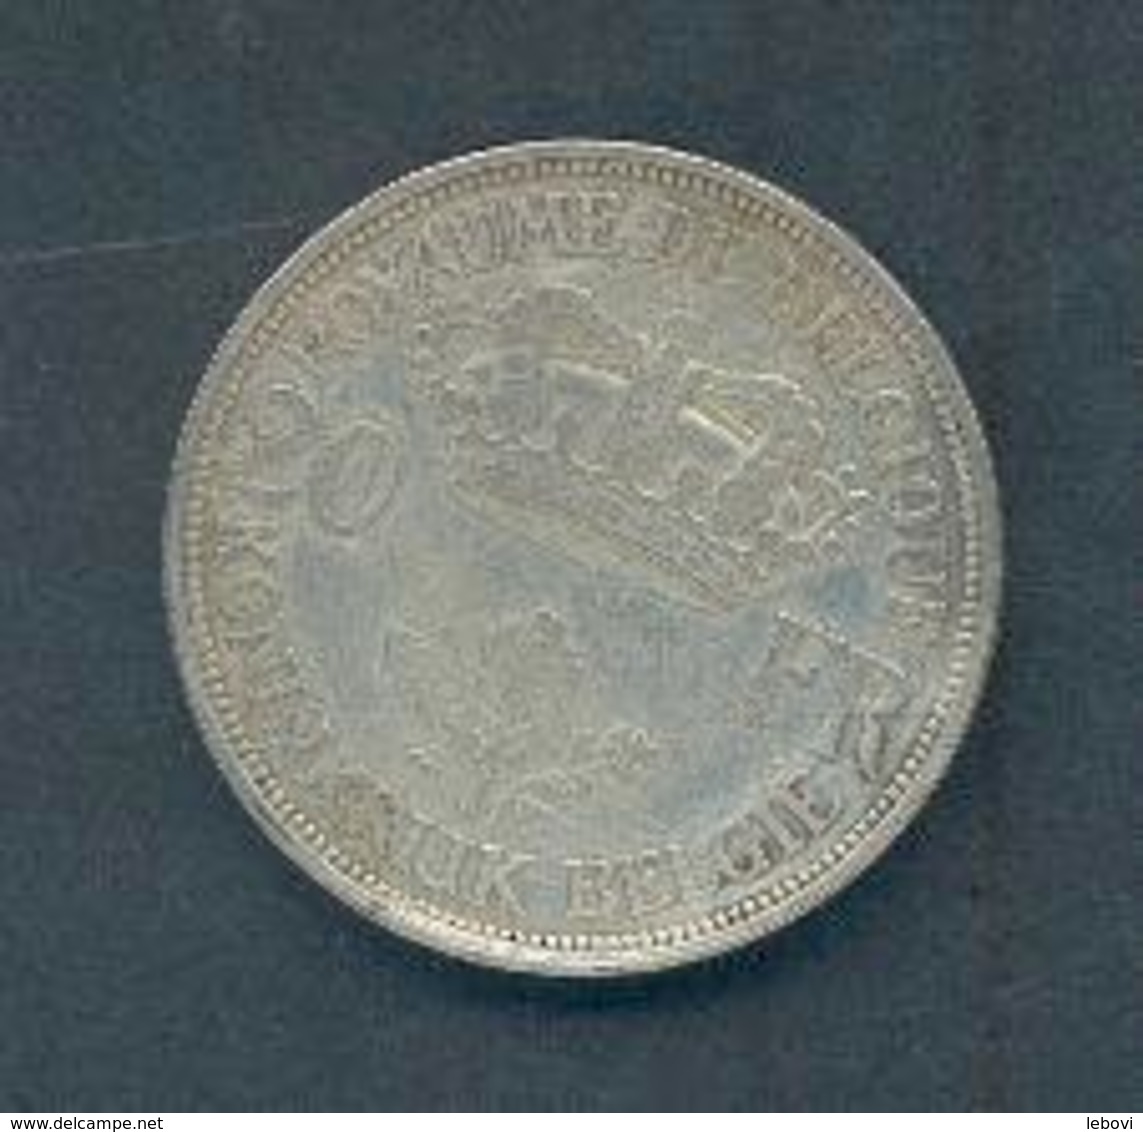 LEOPOLD III – 20 Francs 1934 – Position A - 20 Francs